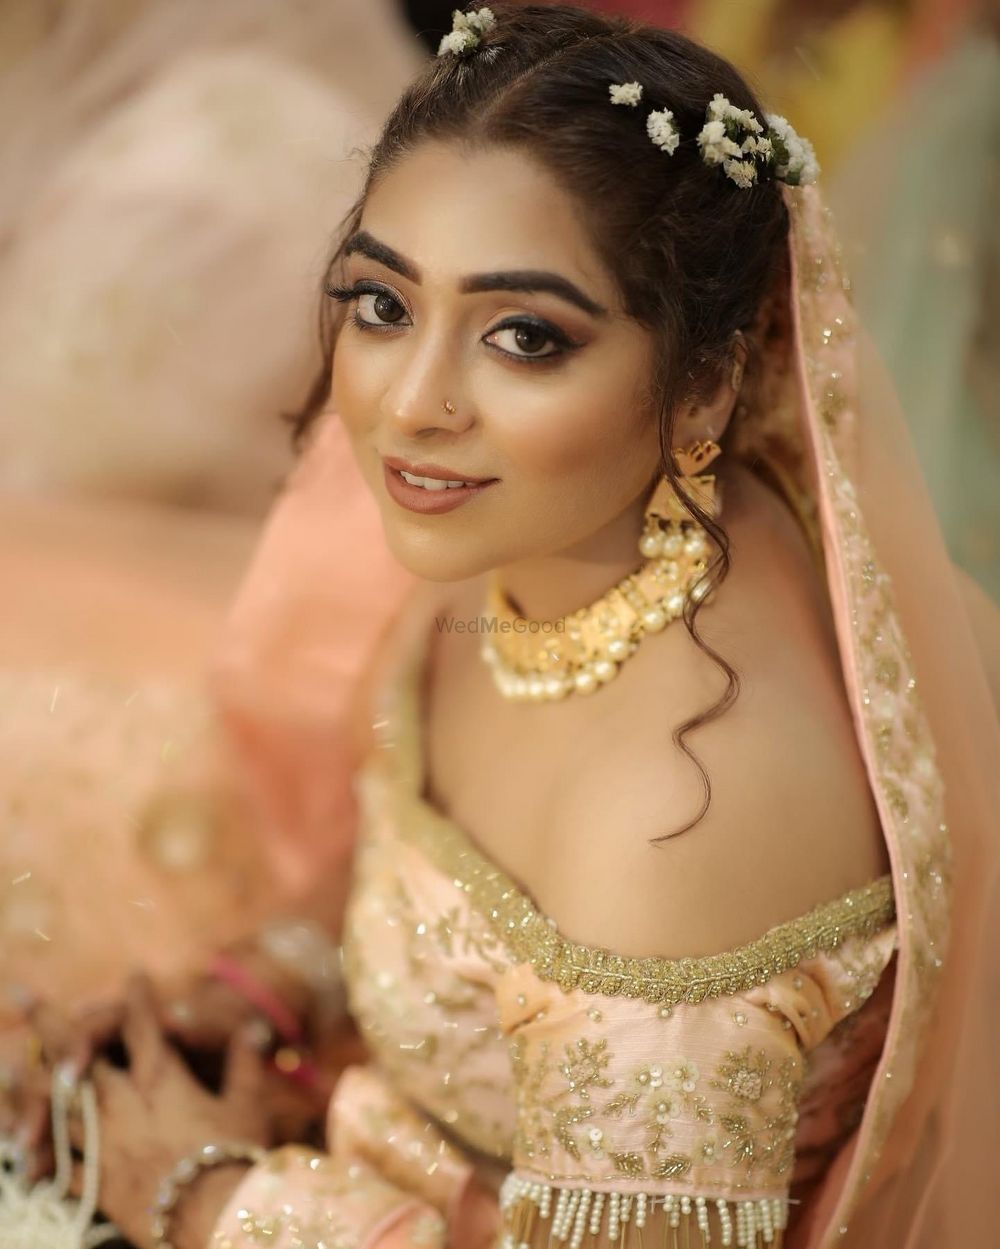 Photo By Maquillage by Gursimran Kaur - Bridal Makeup